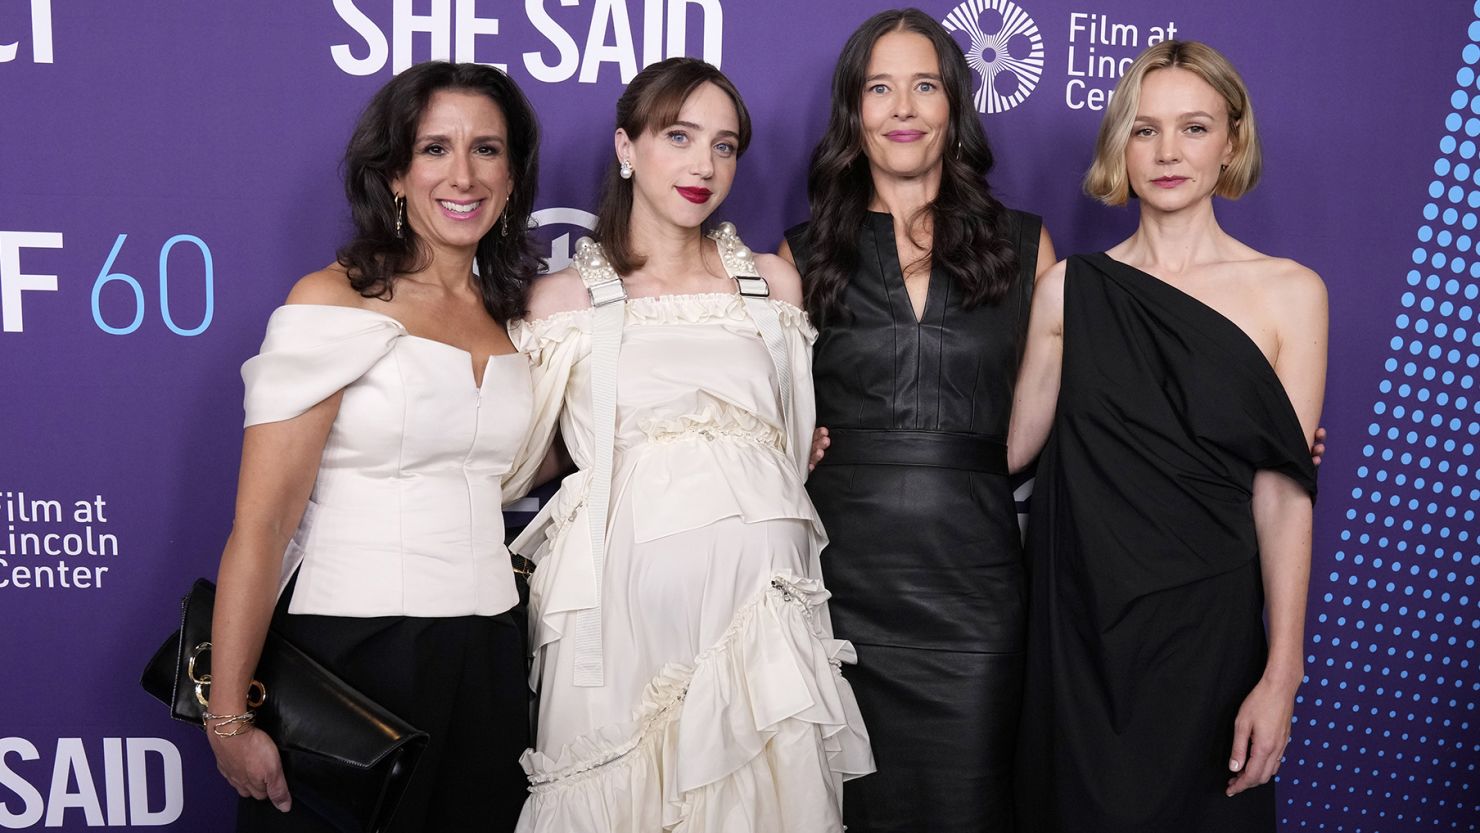 Jodi Kantor, Zoe Kazan, Megan Twohey and Carey Mulligan attend the premiere of "She Said" on Oct. 13.